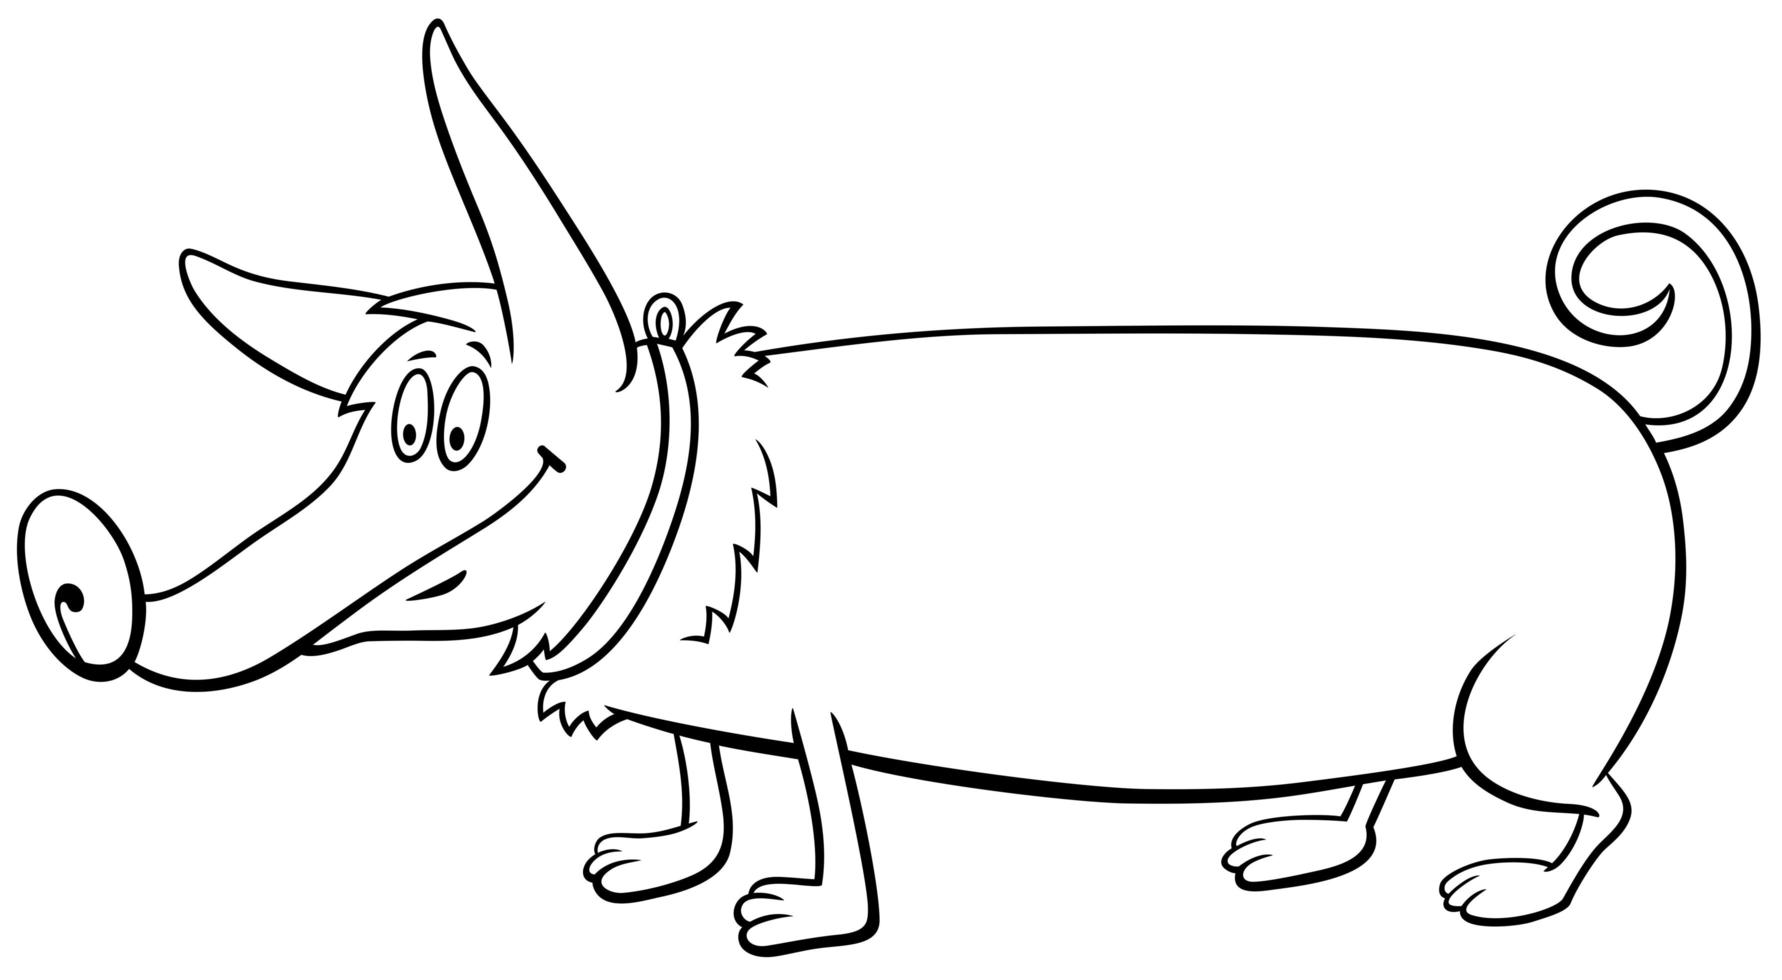 cartoon dog in collar coloring book page vector